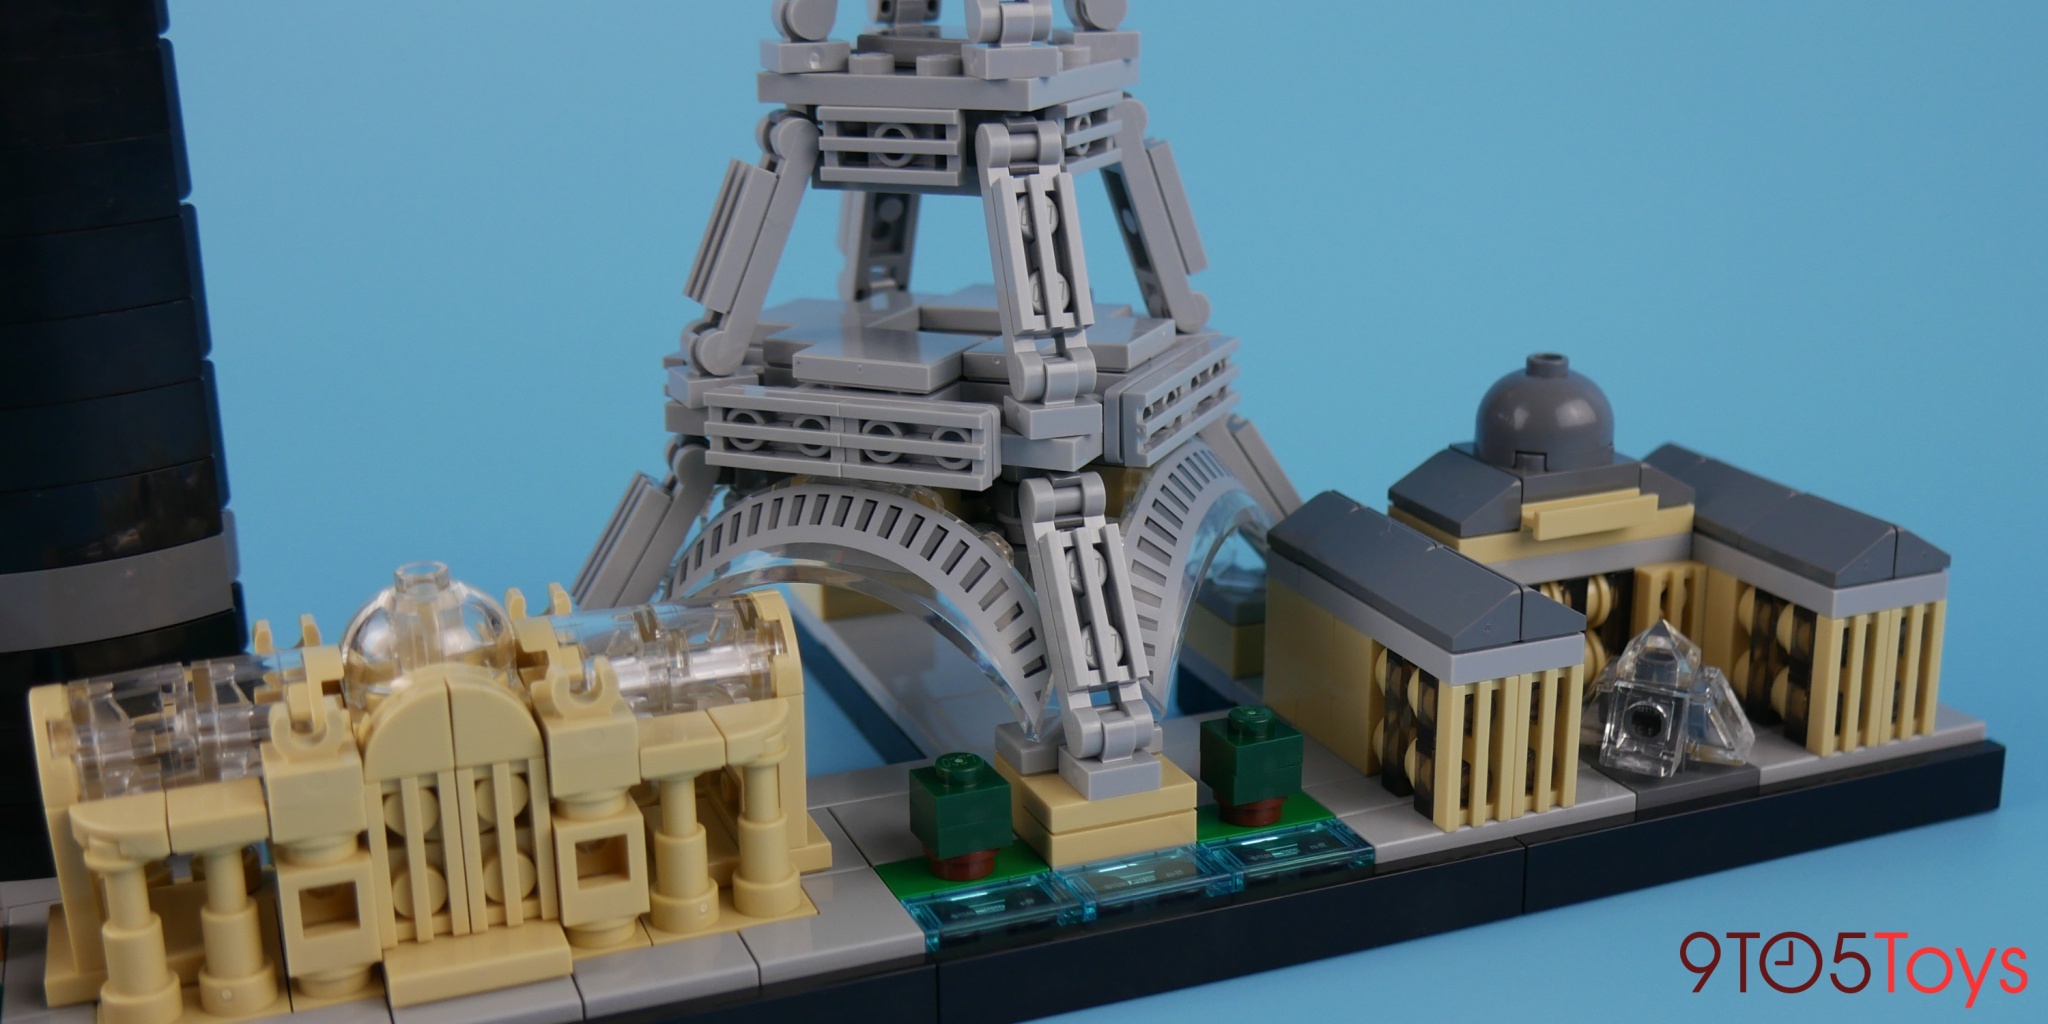 LEGO Eiffel Tower set launching on Black Friday with 10,001 bricks